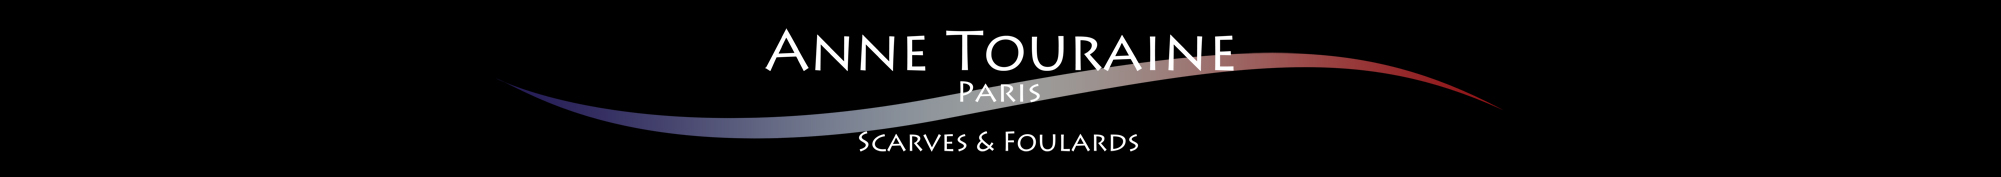 ANNE TOURAINE Paris™